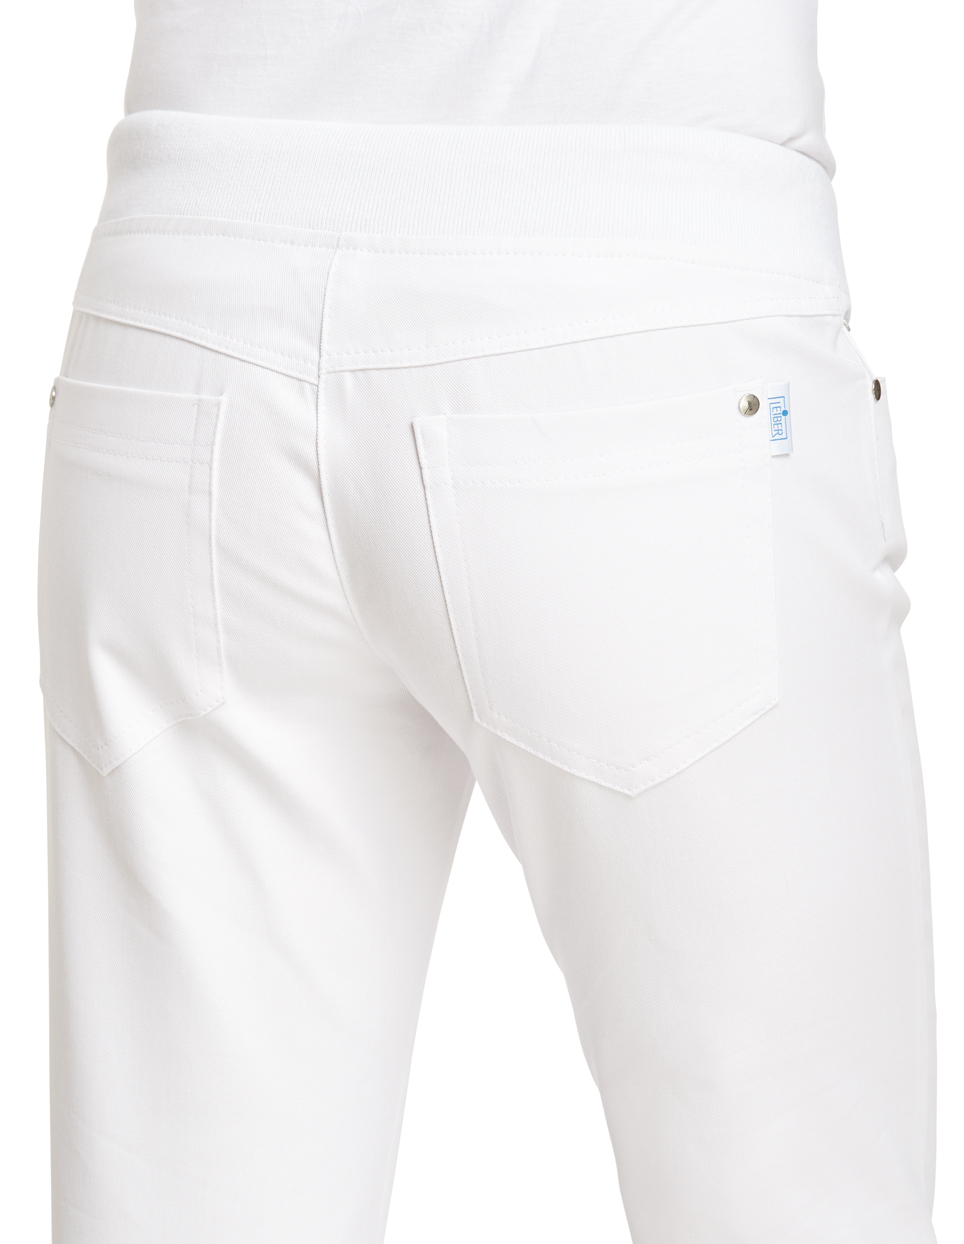 Damen Jeans Stretch weiß Modell 6832